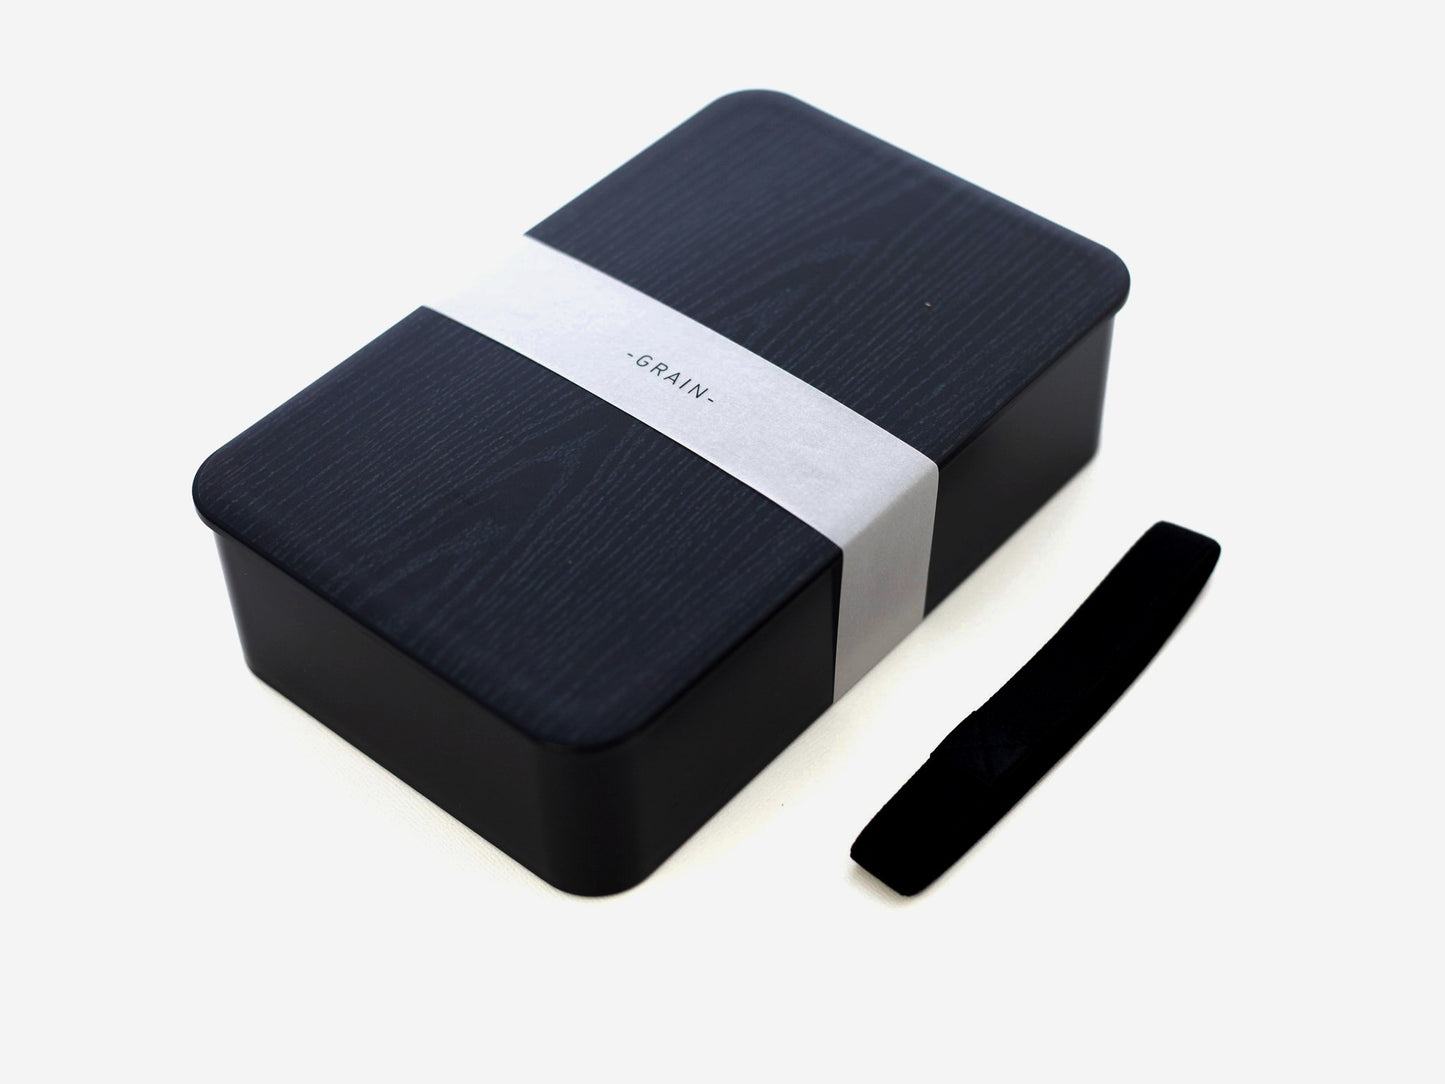 Woodgrain One Tier Bento Box 800mL | Black